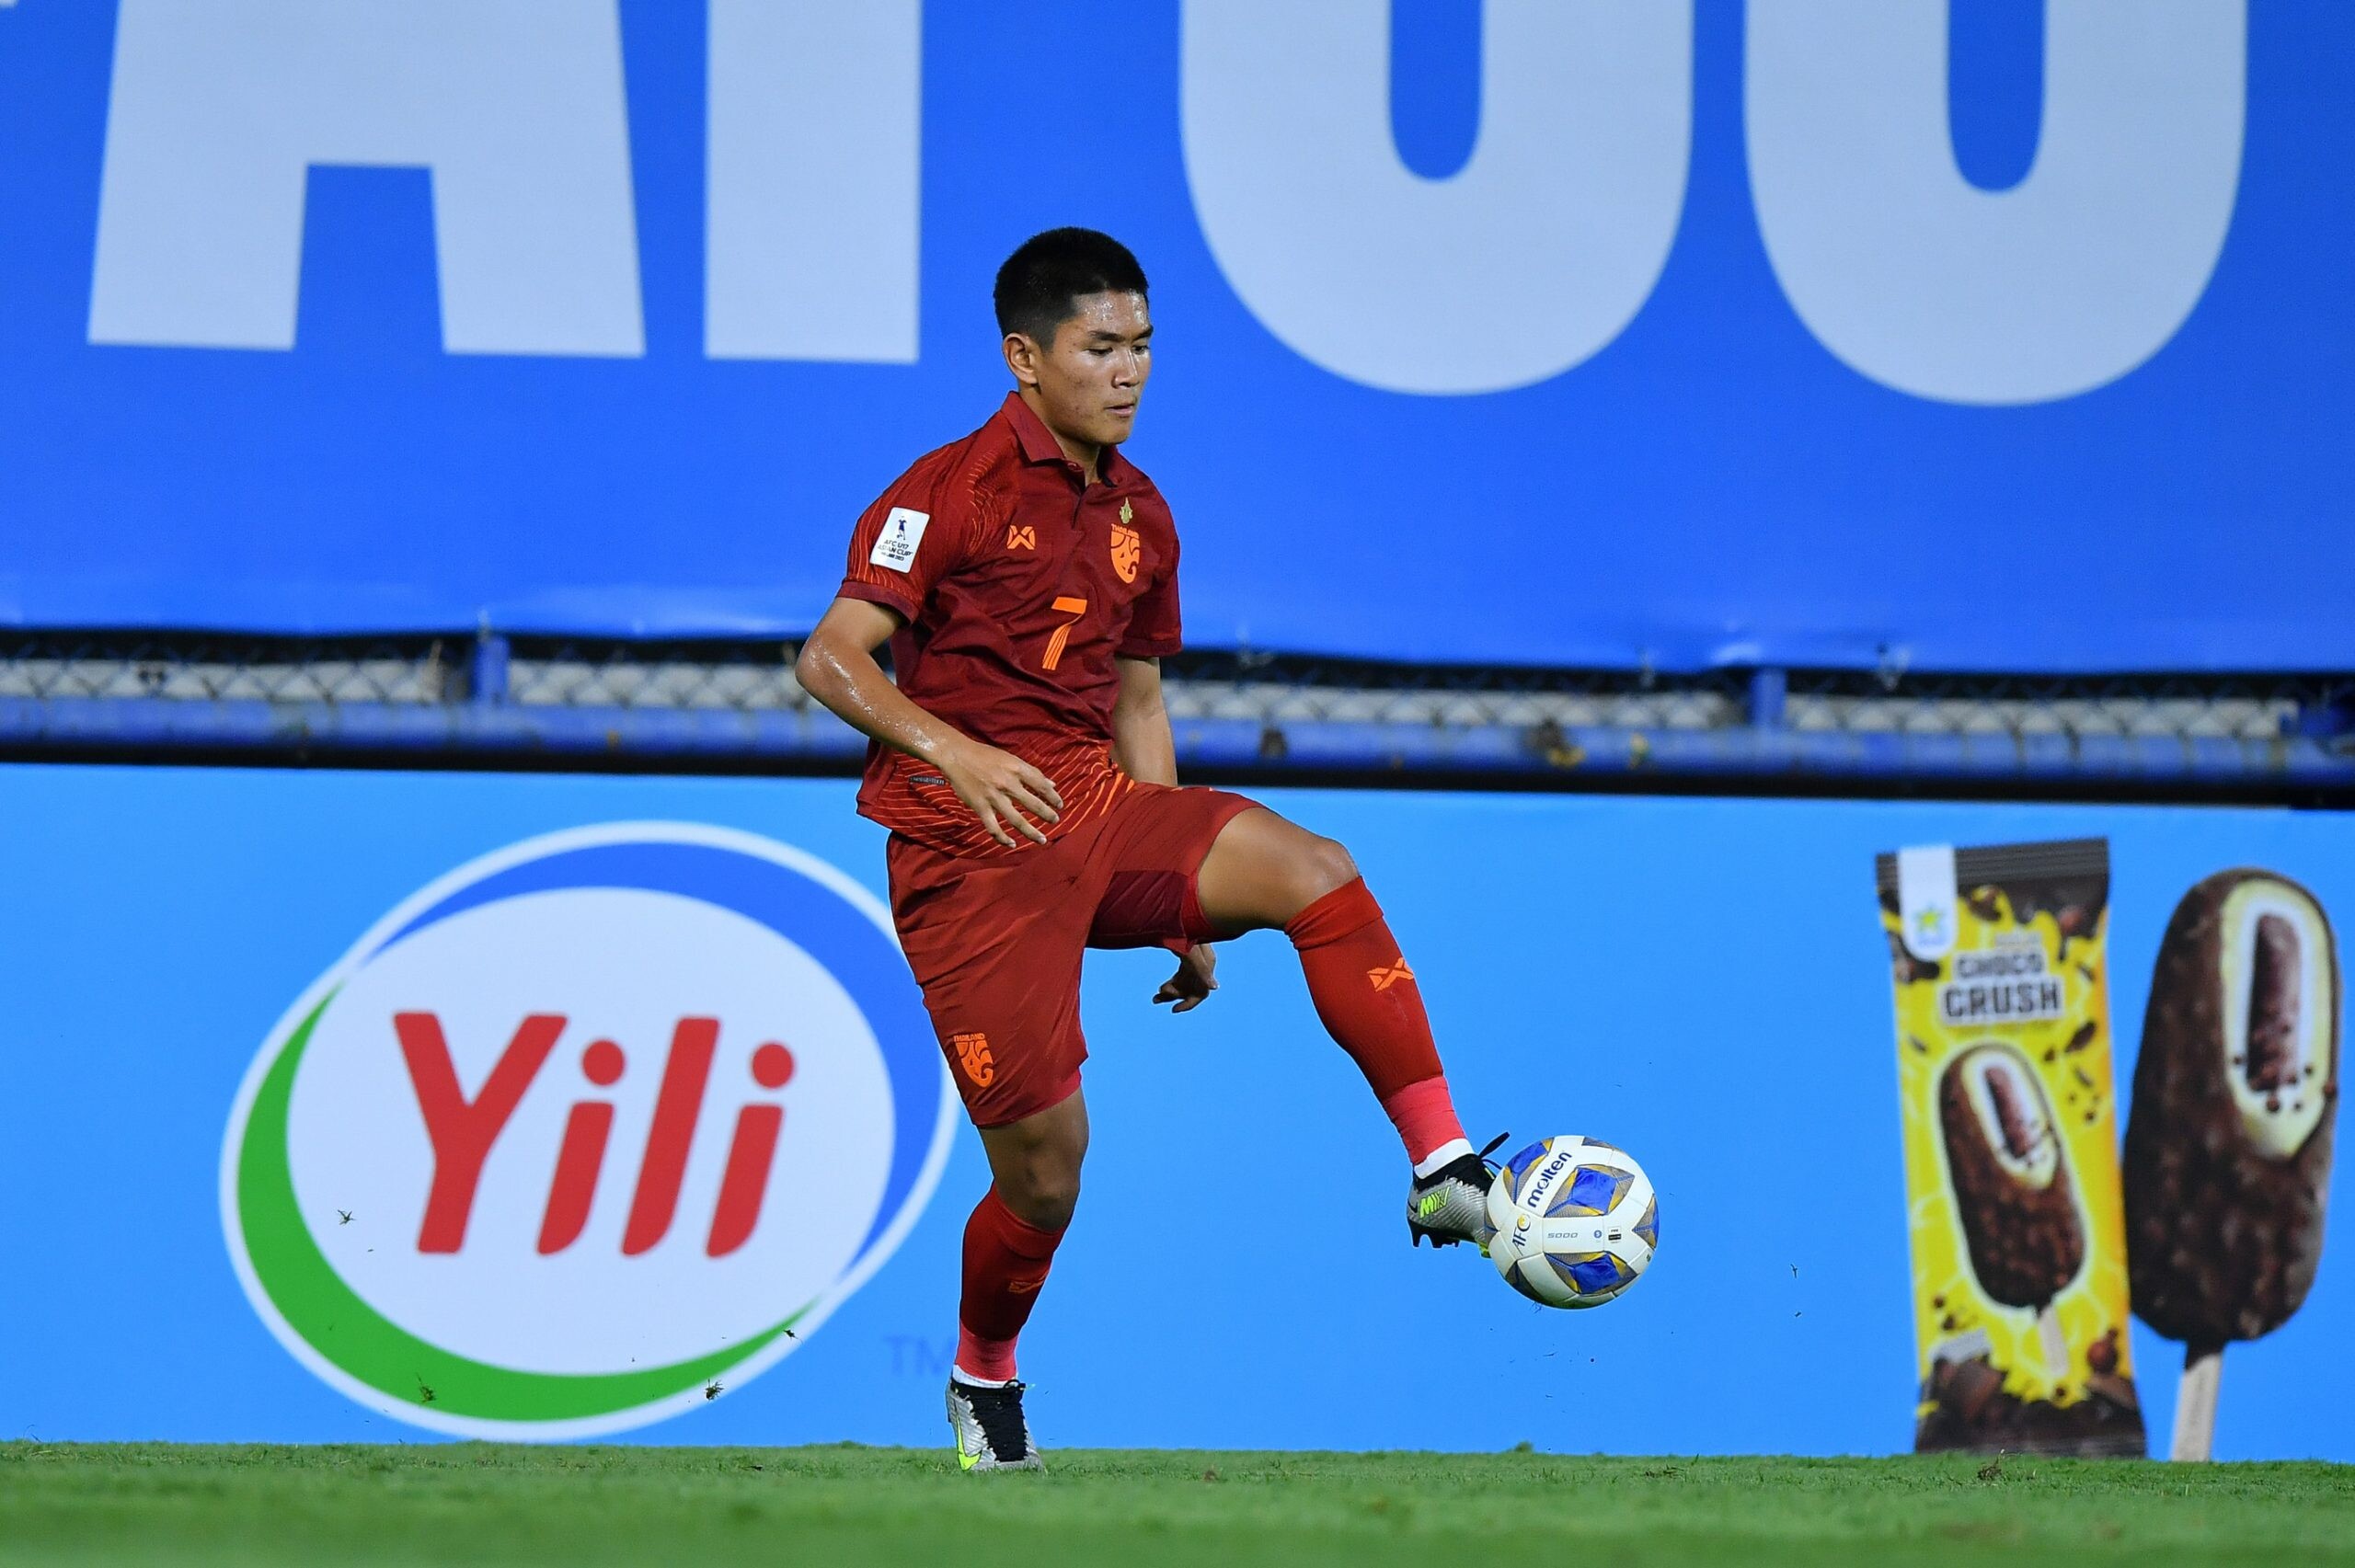 Yili สนับสนุนการแข่งขันฟุตบอล AFC U-17 Asian Cup มุ่งพัฒนากีฬา-ส่งเสริมโภชนาการ